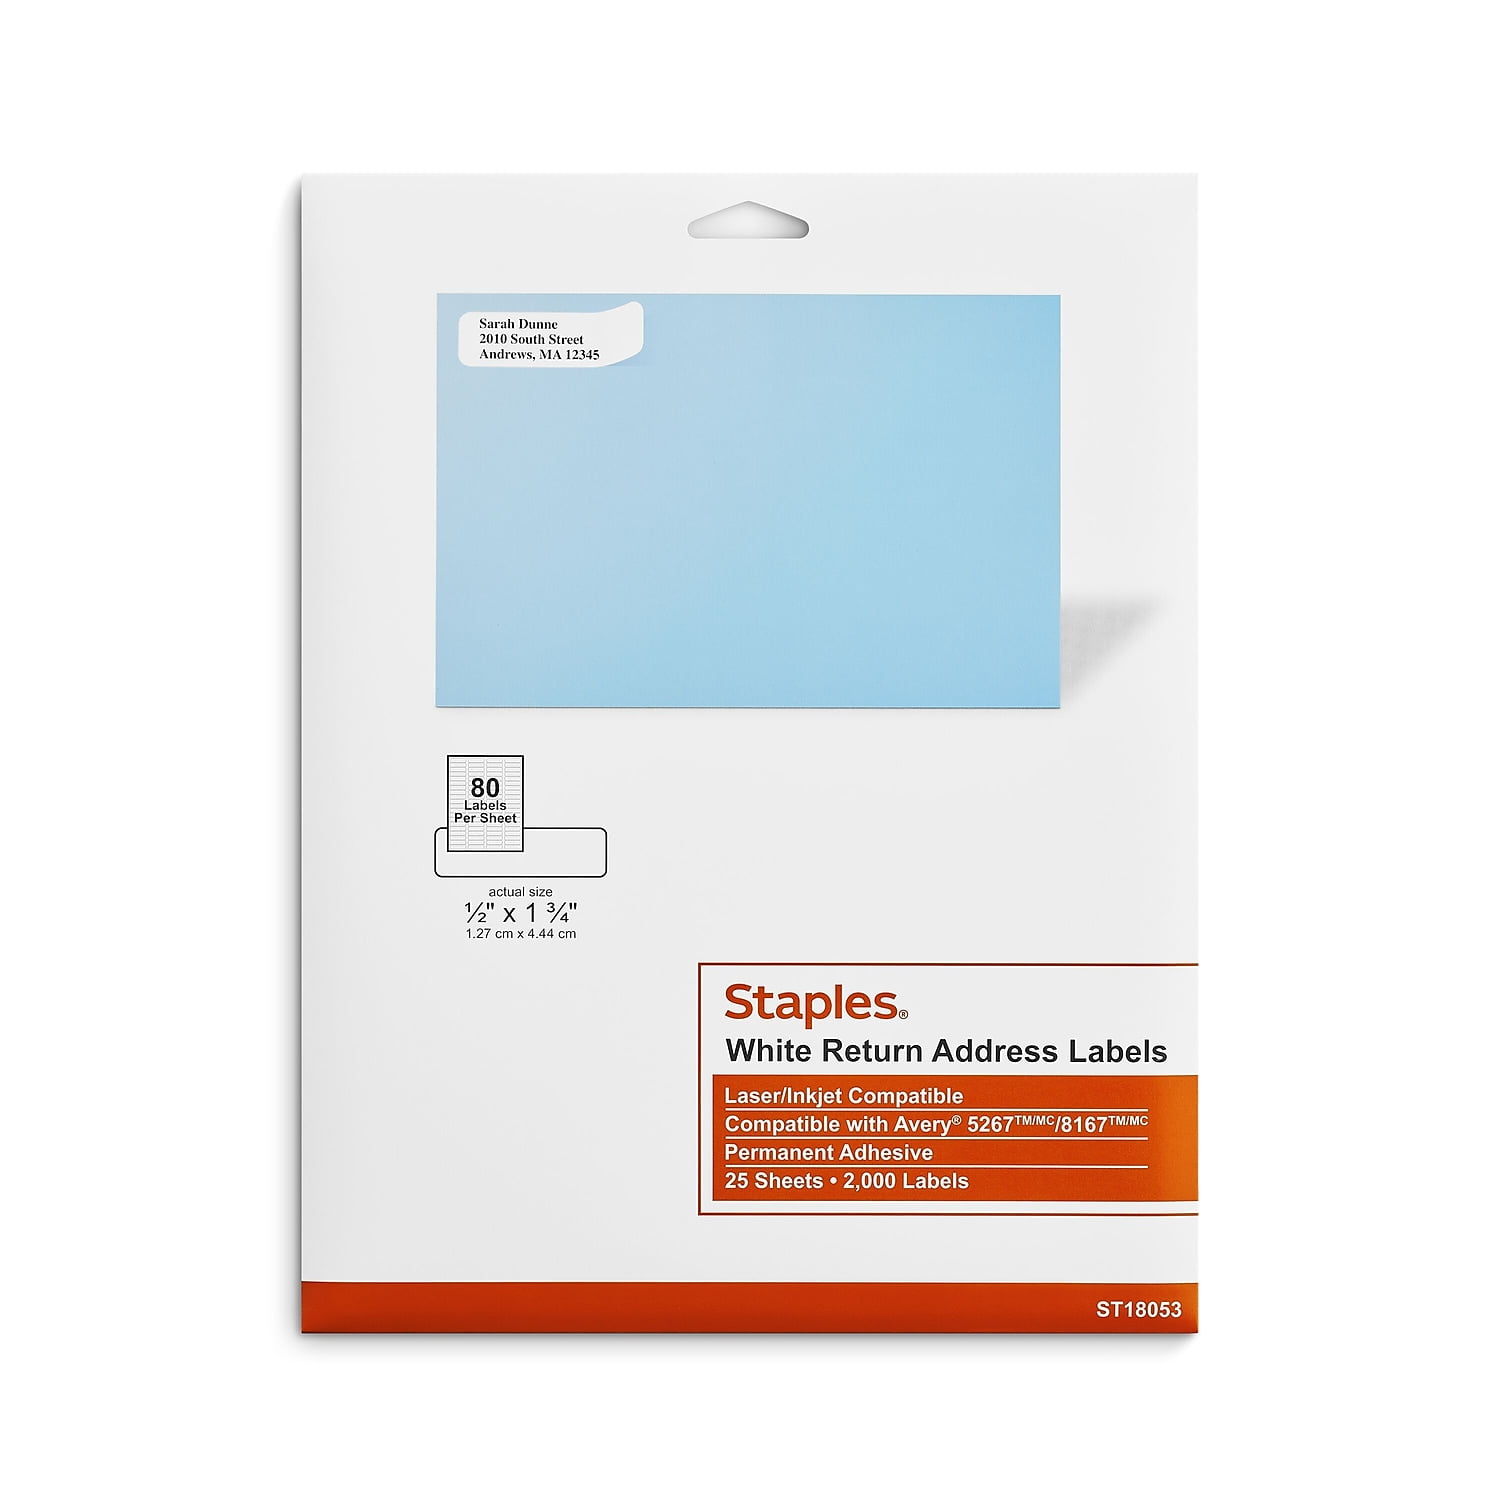 A4 / A3 Printer Paper & Integrated Address Sheet Labels